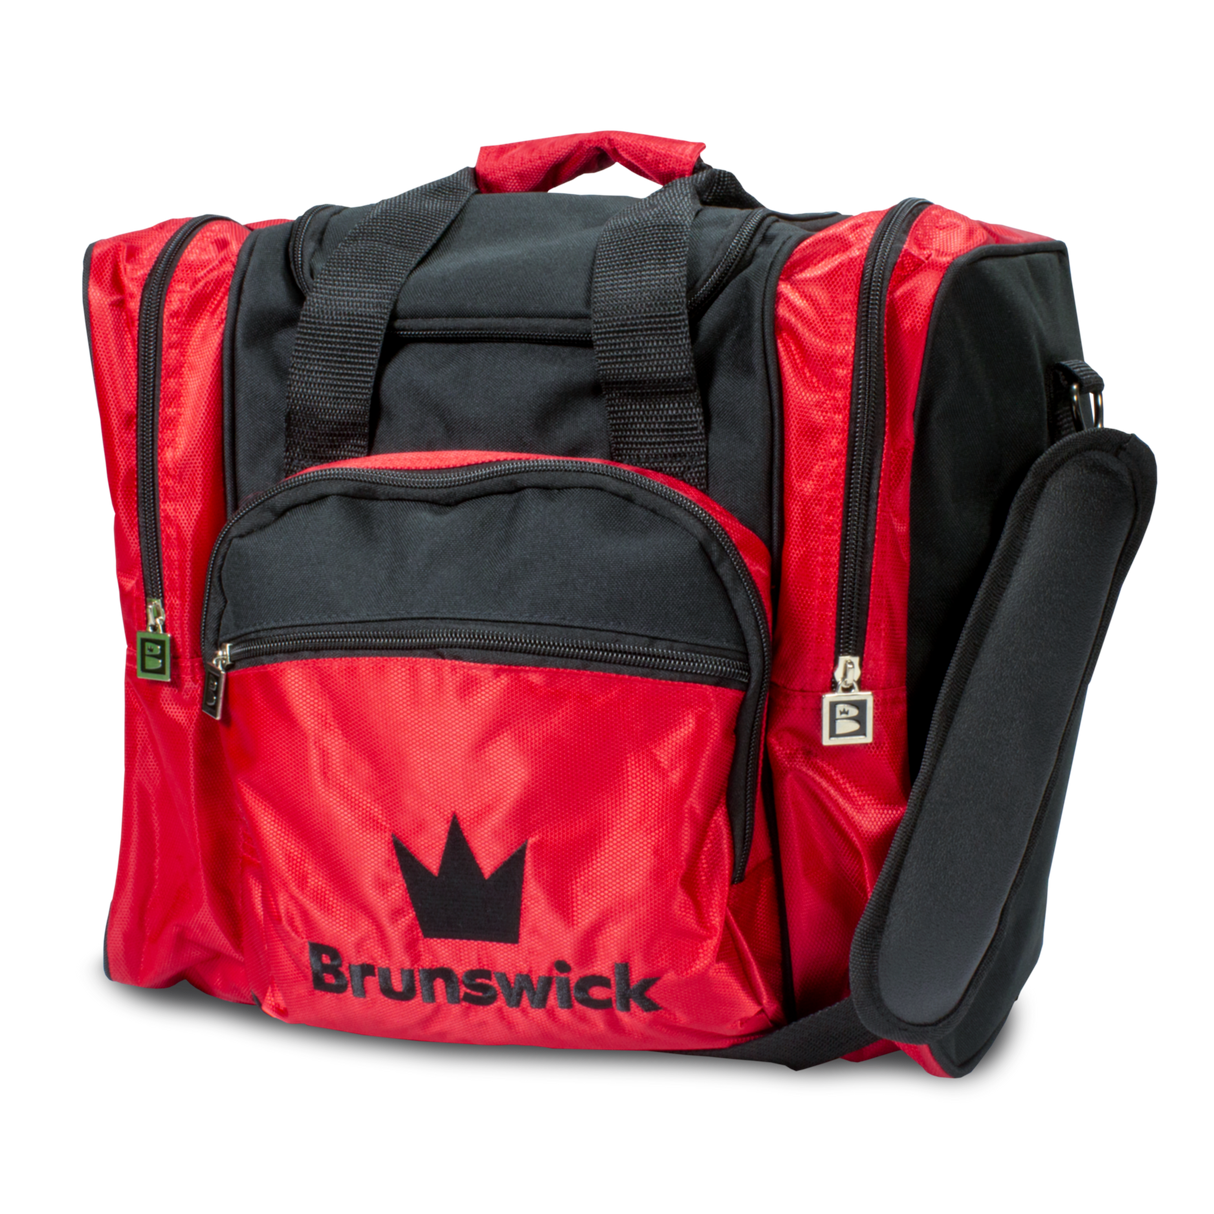 brunswick single ball tote Edge Red bowling bag travel suitcase league tournament play sale discount coupon online pba tour